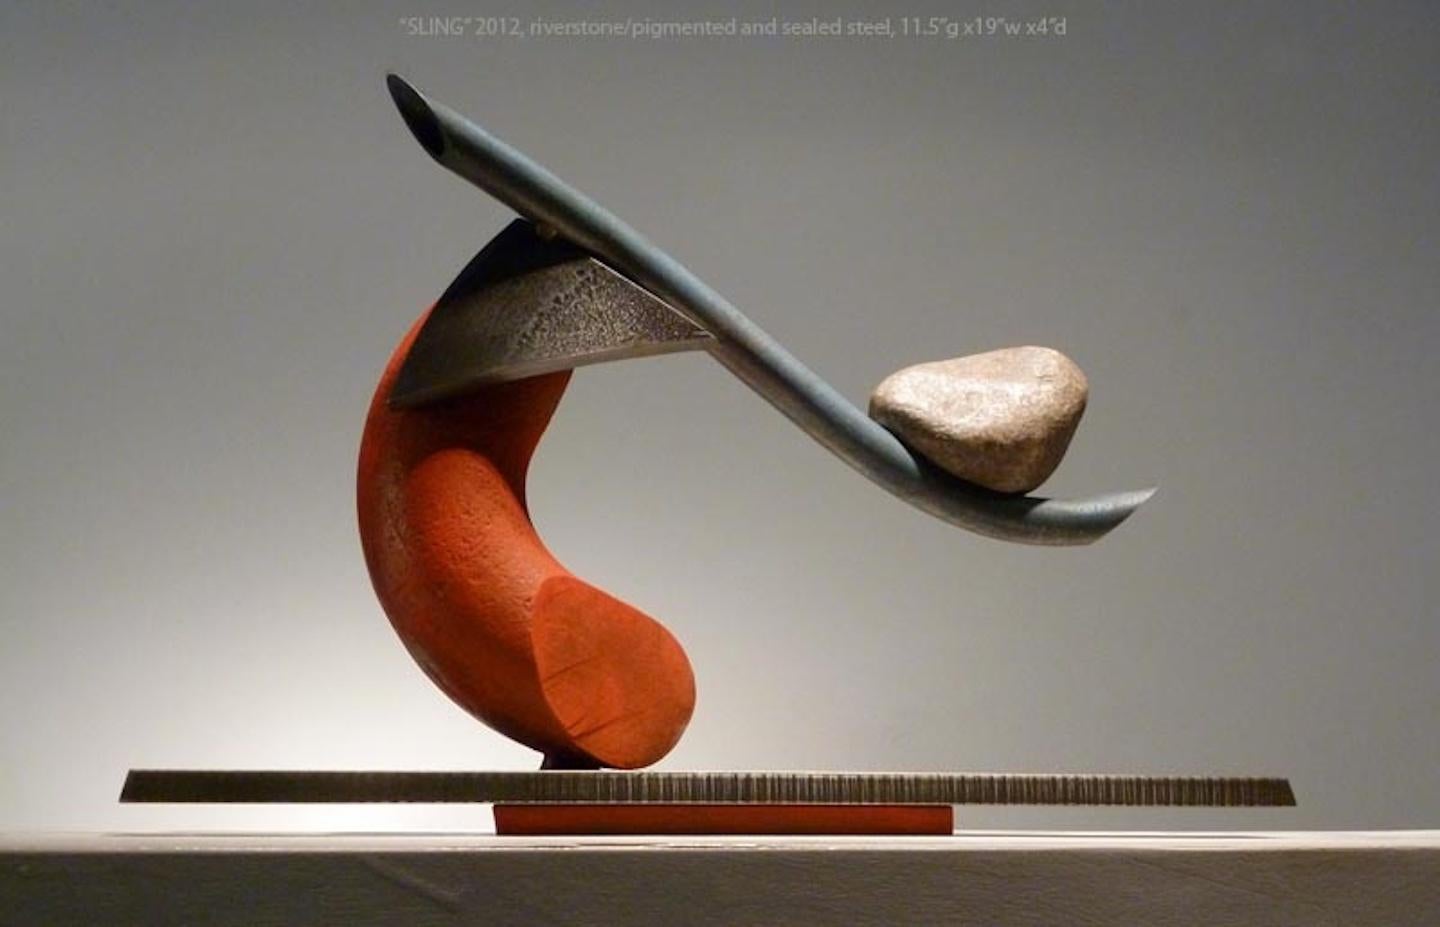 Sling - Brown Abstract Sculpture by John Van Alstine